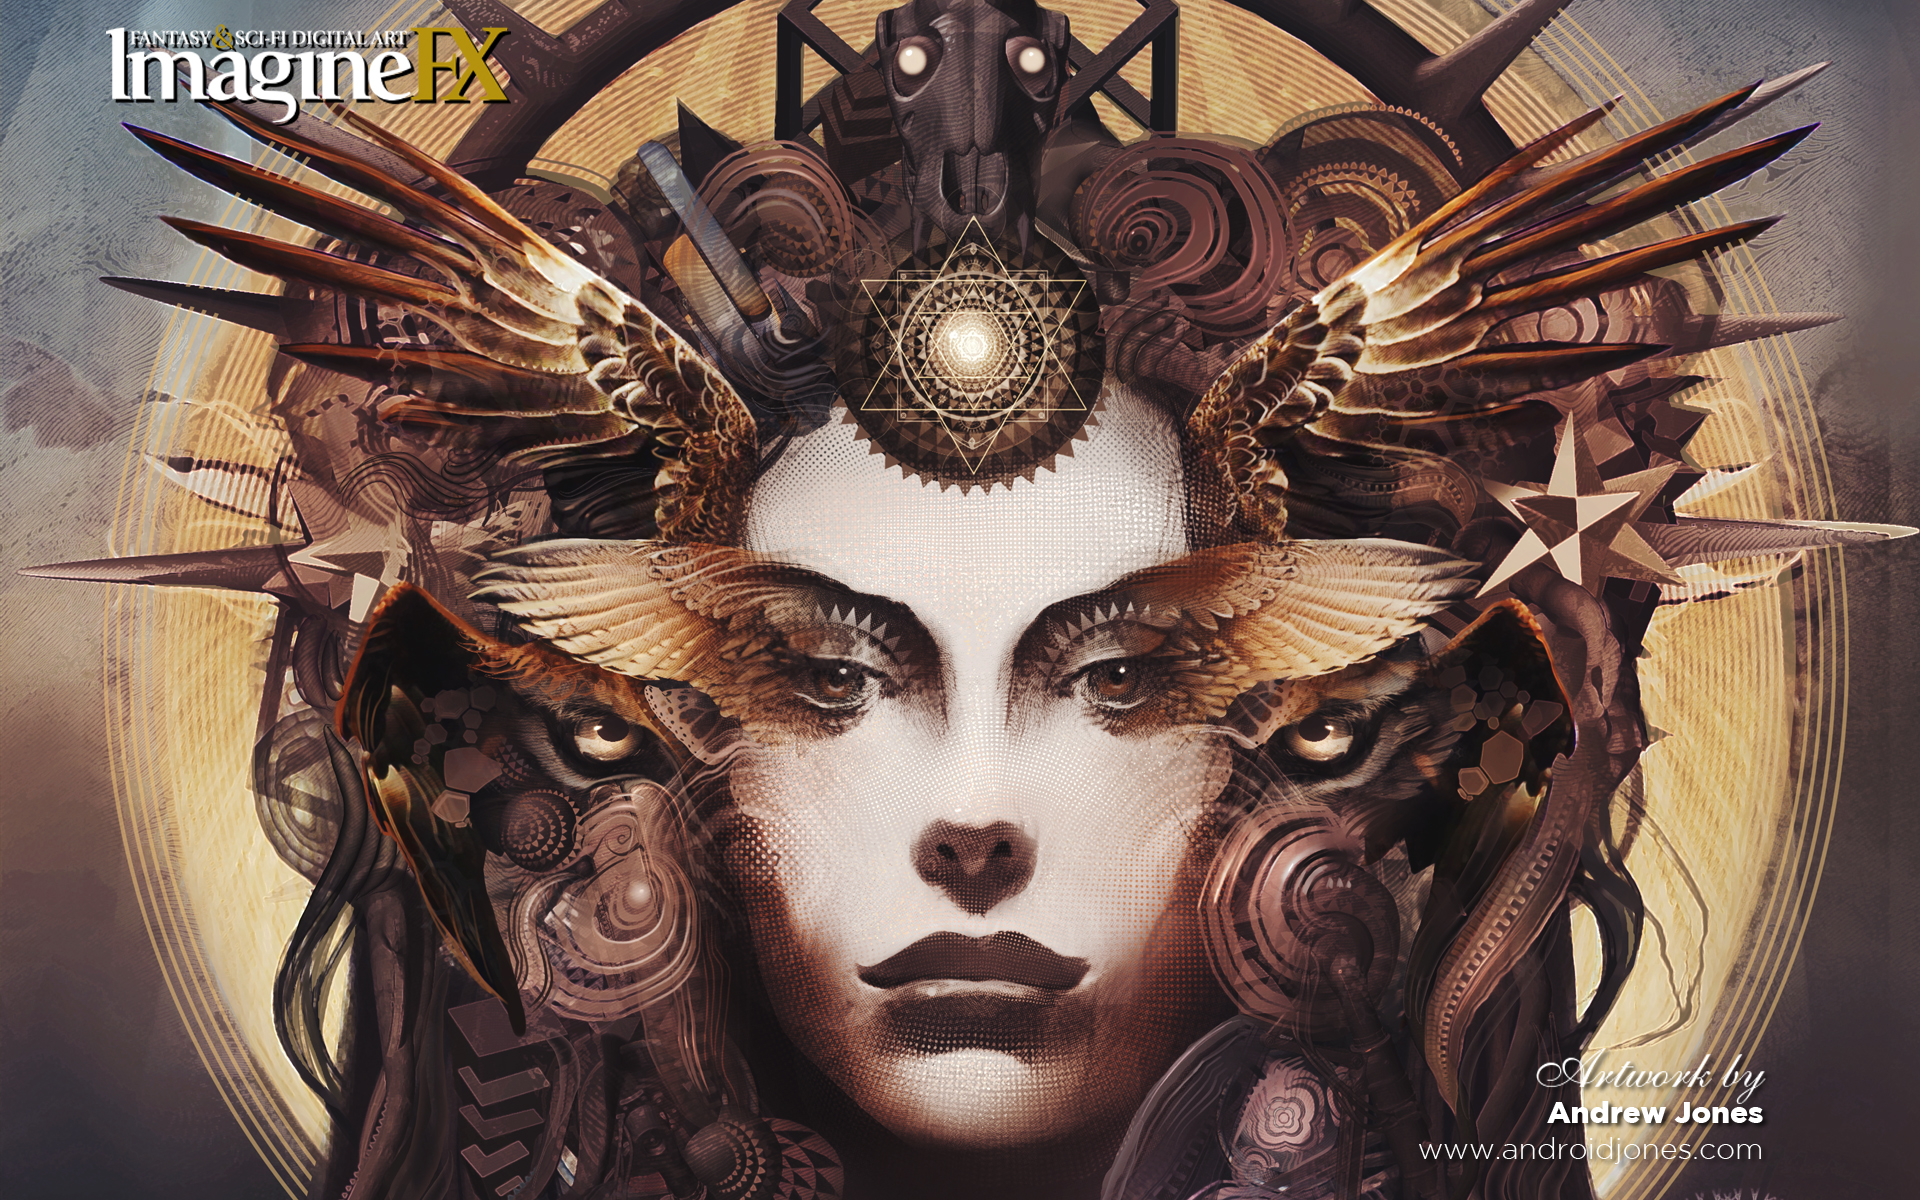 women, stars, steampunk, fantasy art, faces, Android Jones, imagine fx - desktop wallpaper